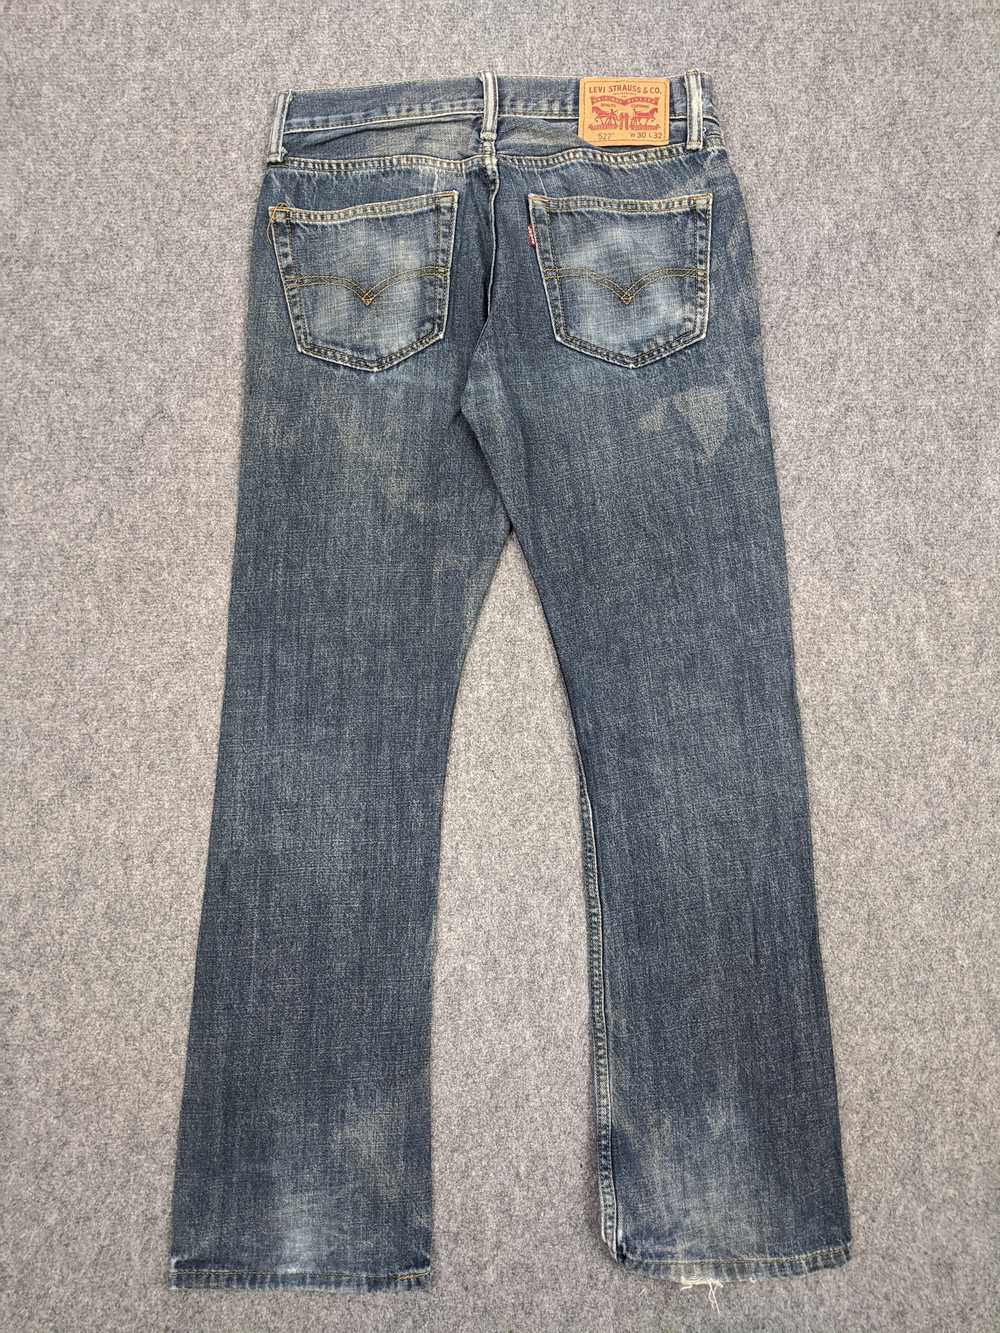 Vintage - Vintage Levis 527 Jeans - image 3